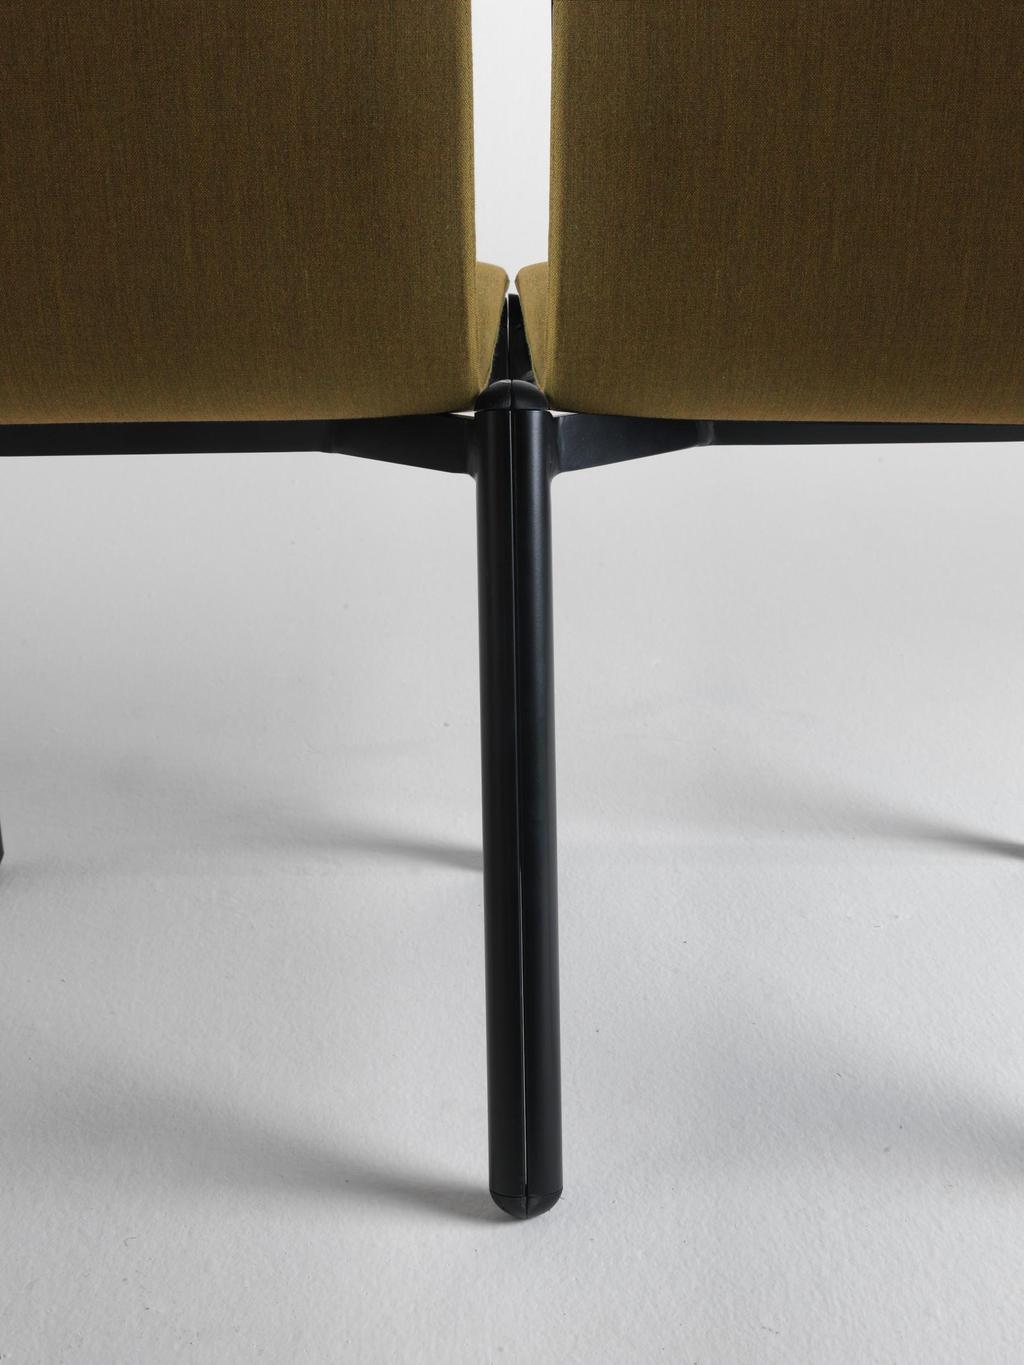 Upholstered (Lago fabrics) or white/black lacquered ash seat